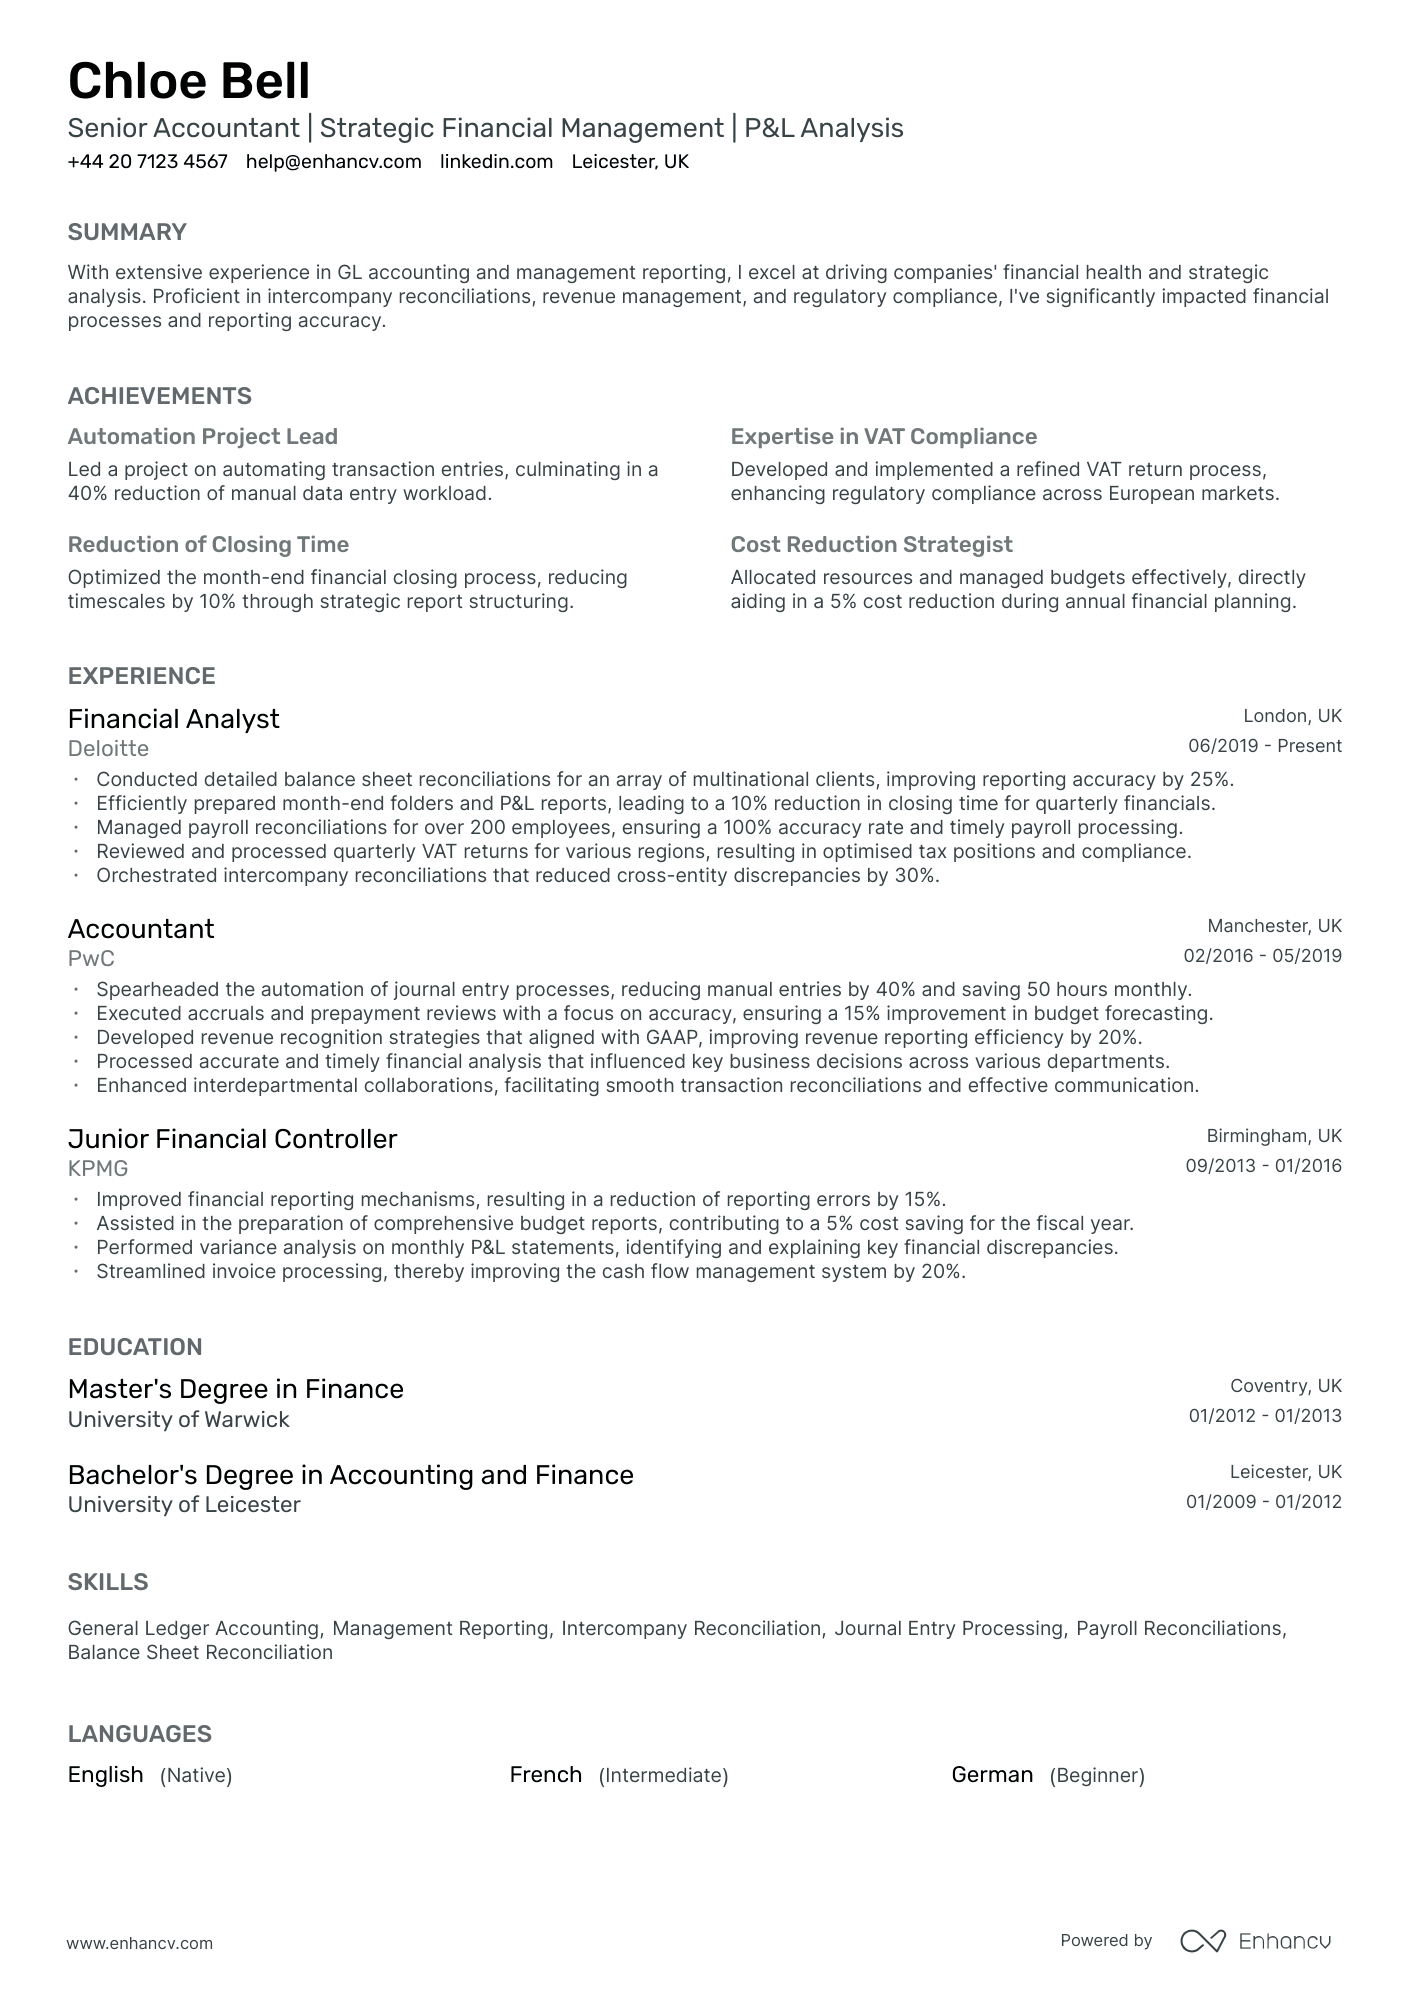 Classic simple CV template